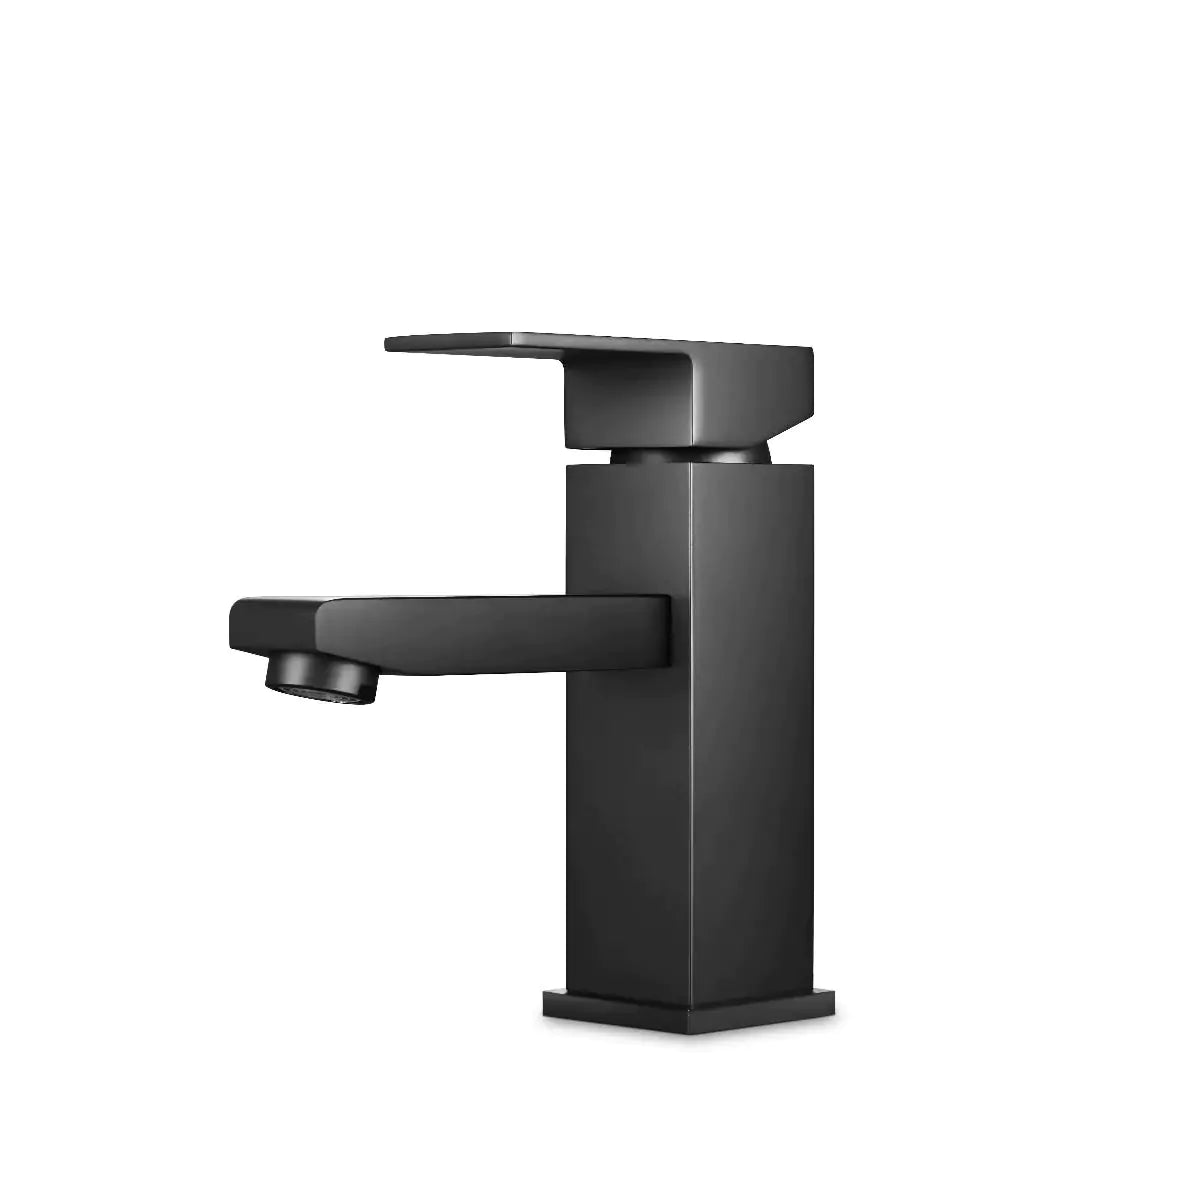 Blaze Series Black Basin Mixer: Stylish and Functional Bathroom Fixture-OX0112_BM